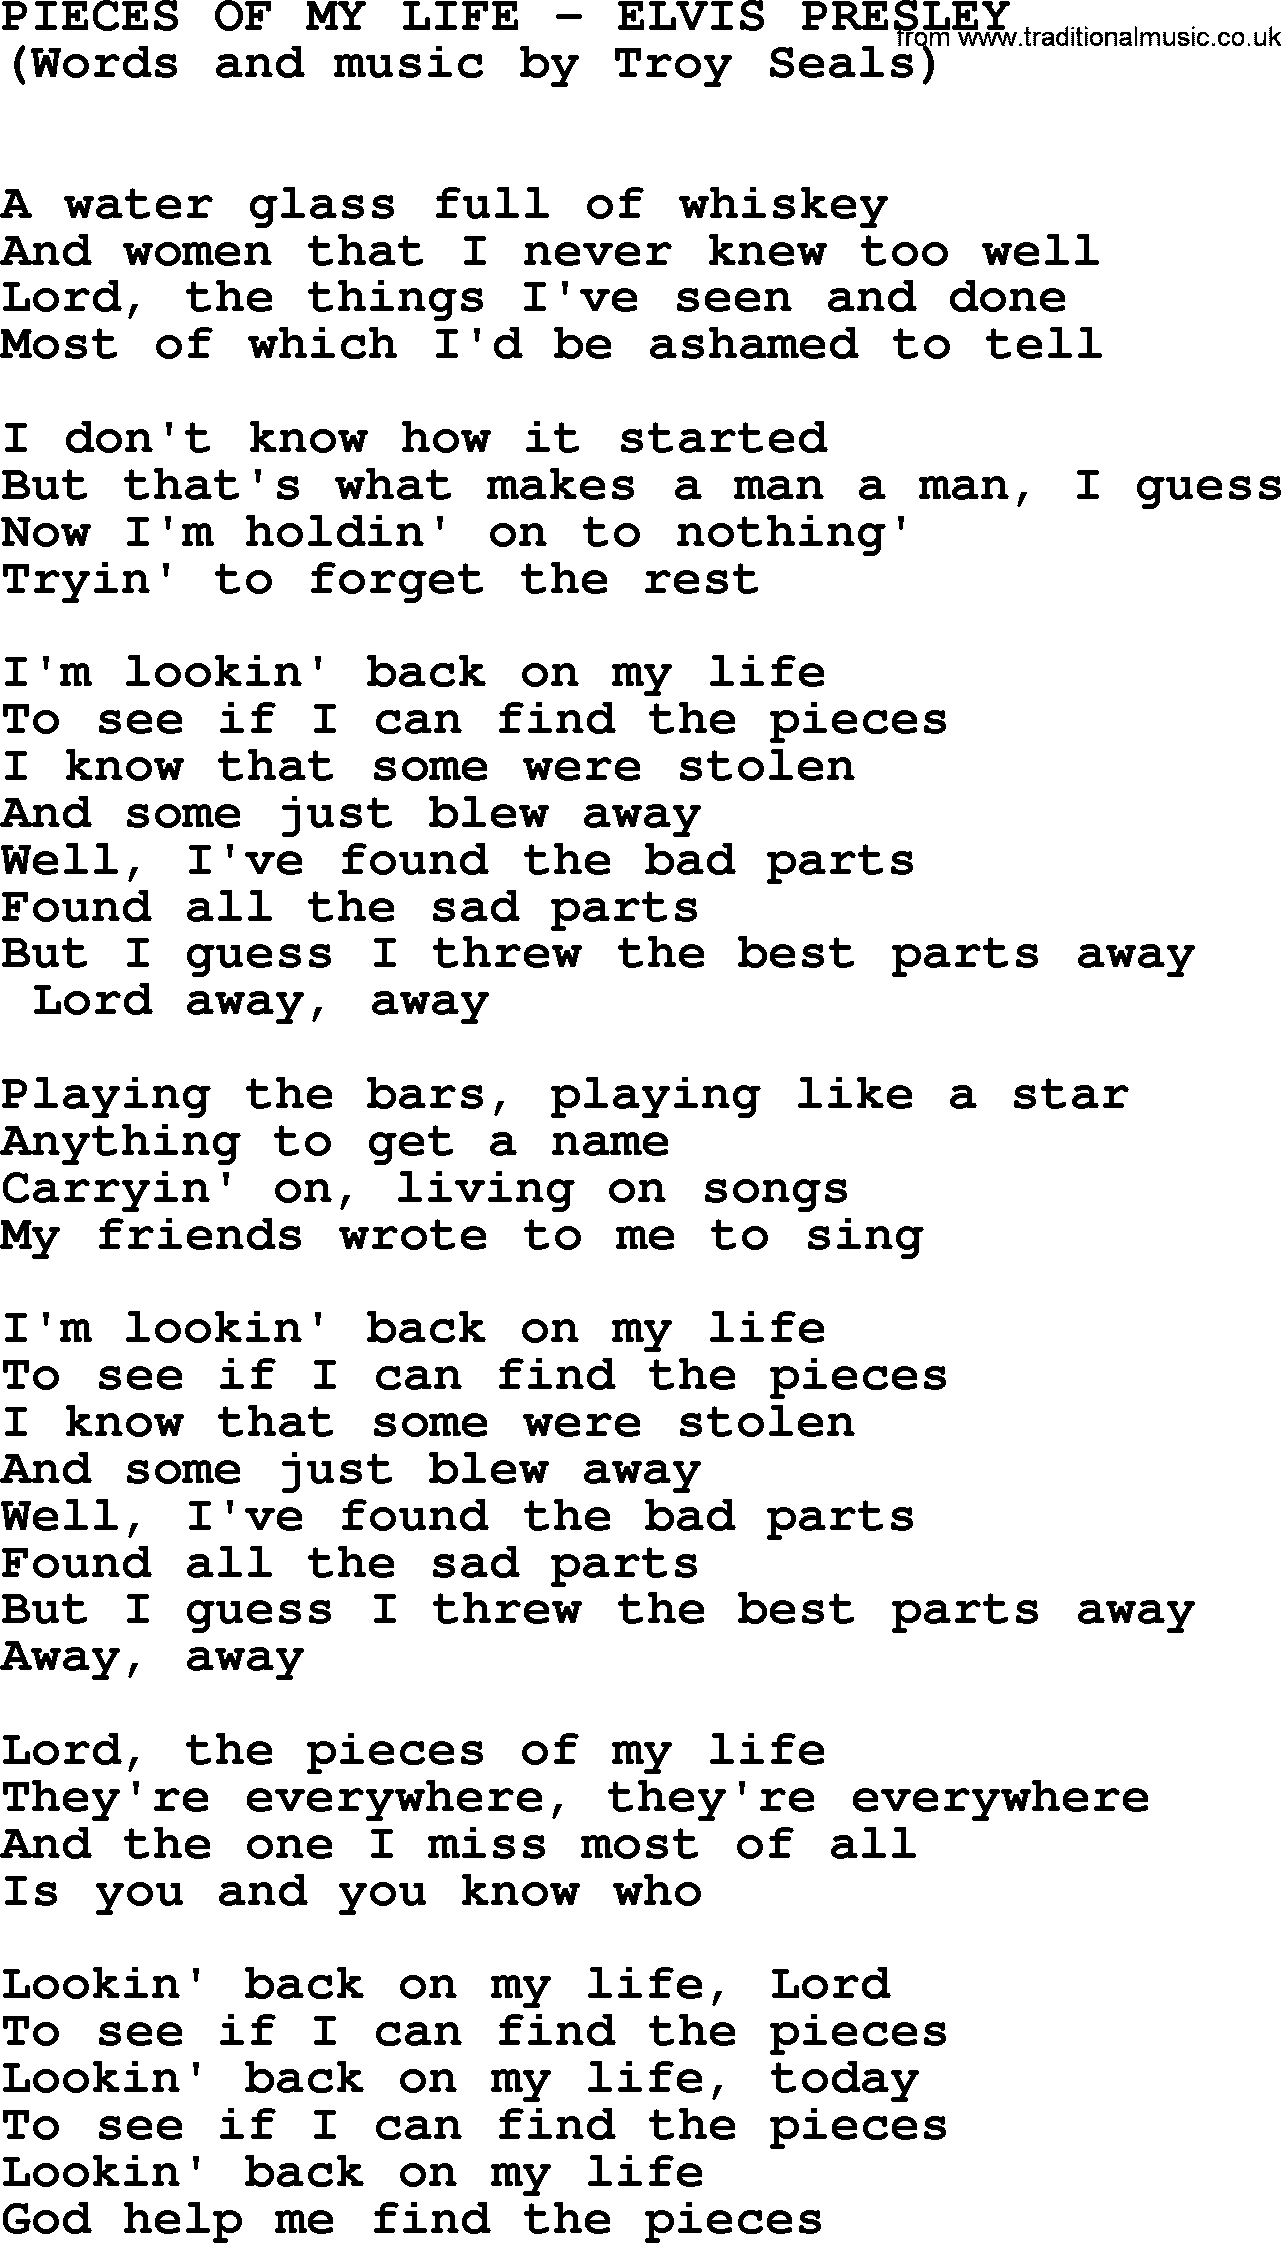 Elvis Presley song: Pieces Of My Life lyrics